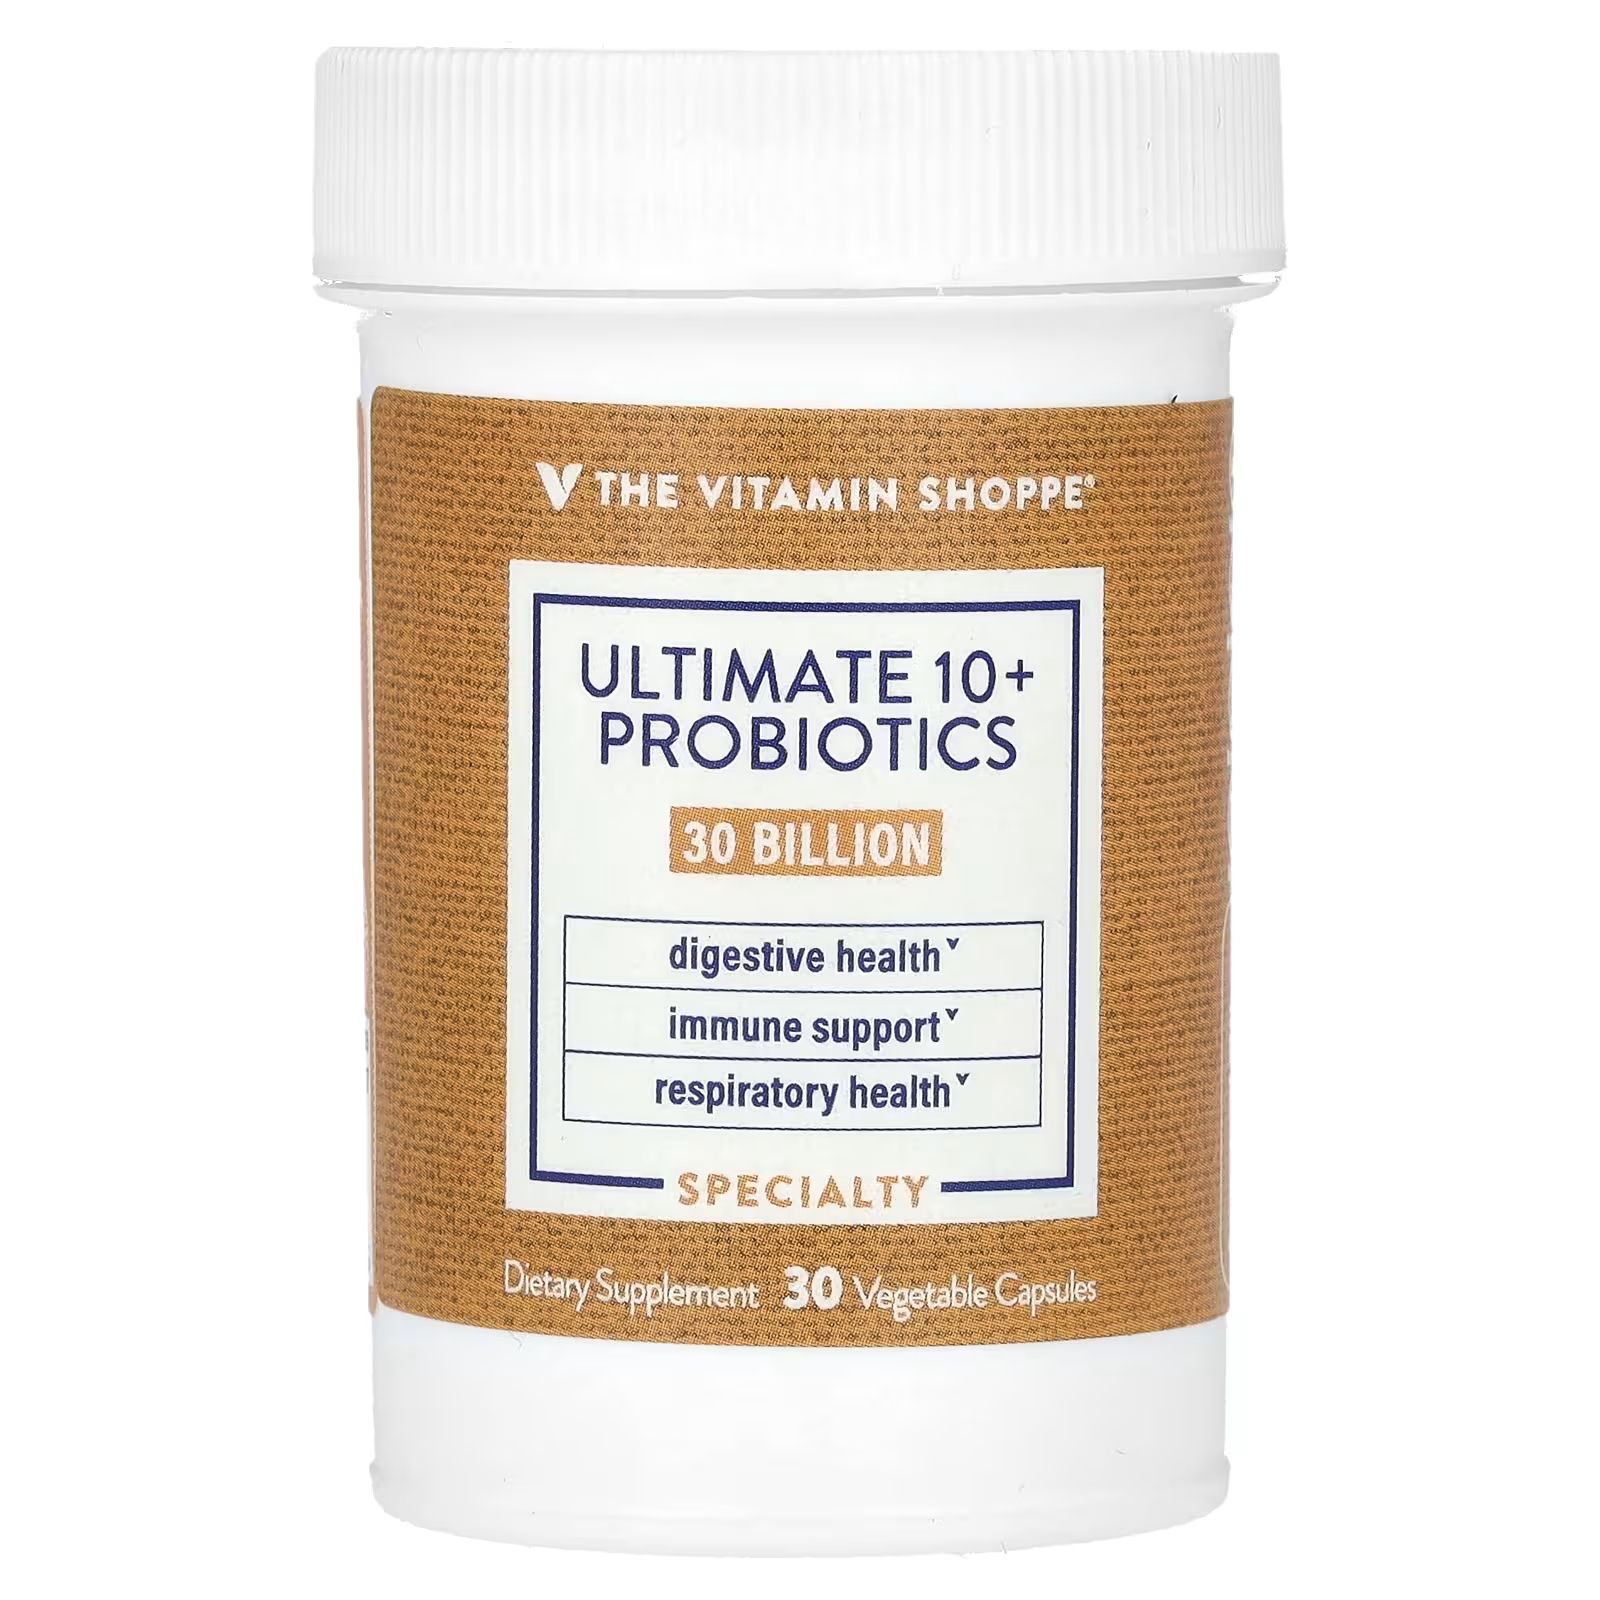 Пробиотик The Vitamin Shoppe Ultimate 10+ Probiotics 30 миллиардов КОЕ, 30 капсул plantfusion полный веганский пробиотик 35 миллиардов кое 30 веганских капсул